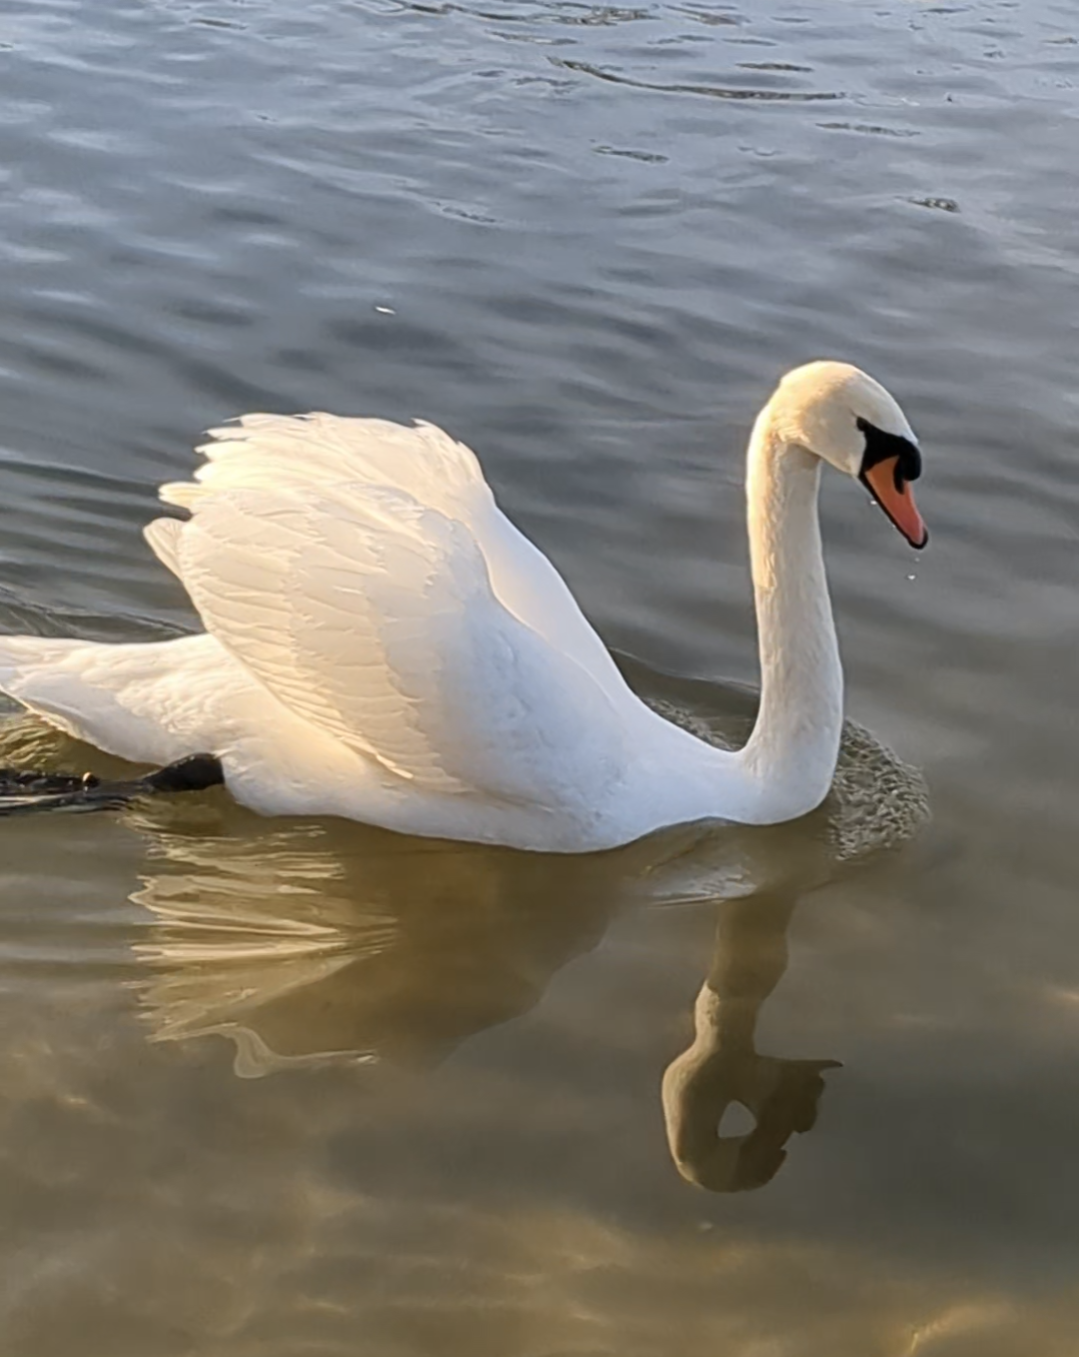 A majestic swan in water, glistening in the sun.